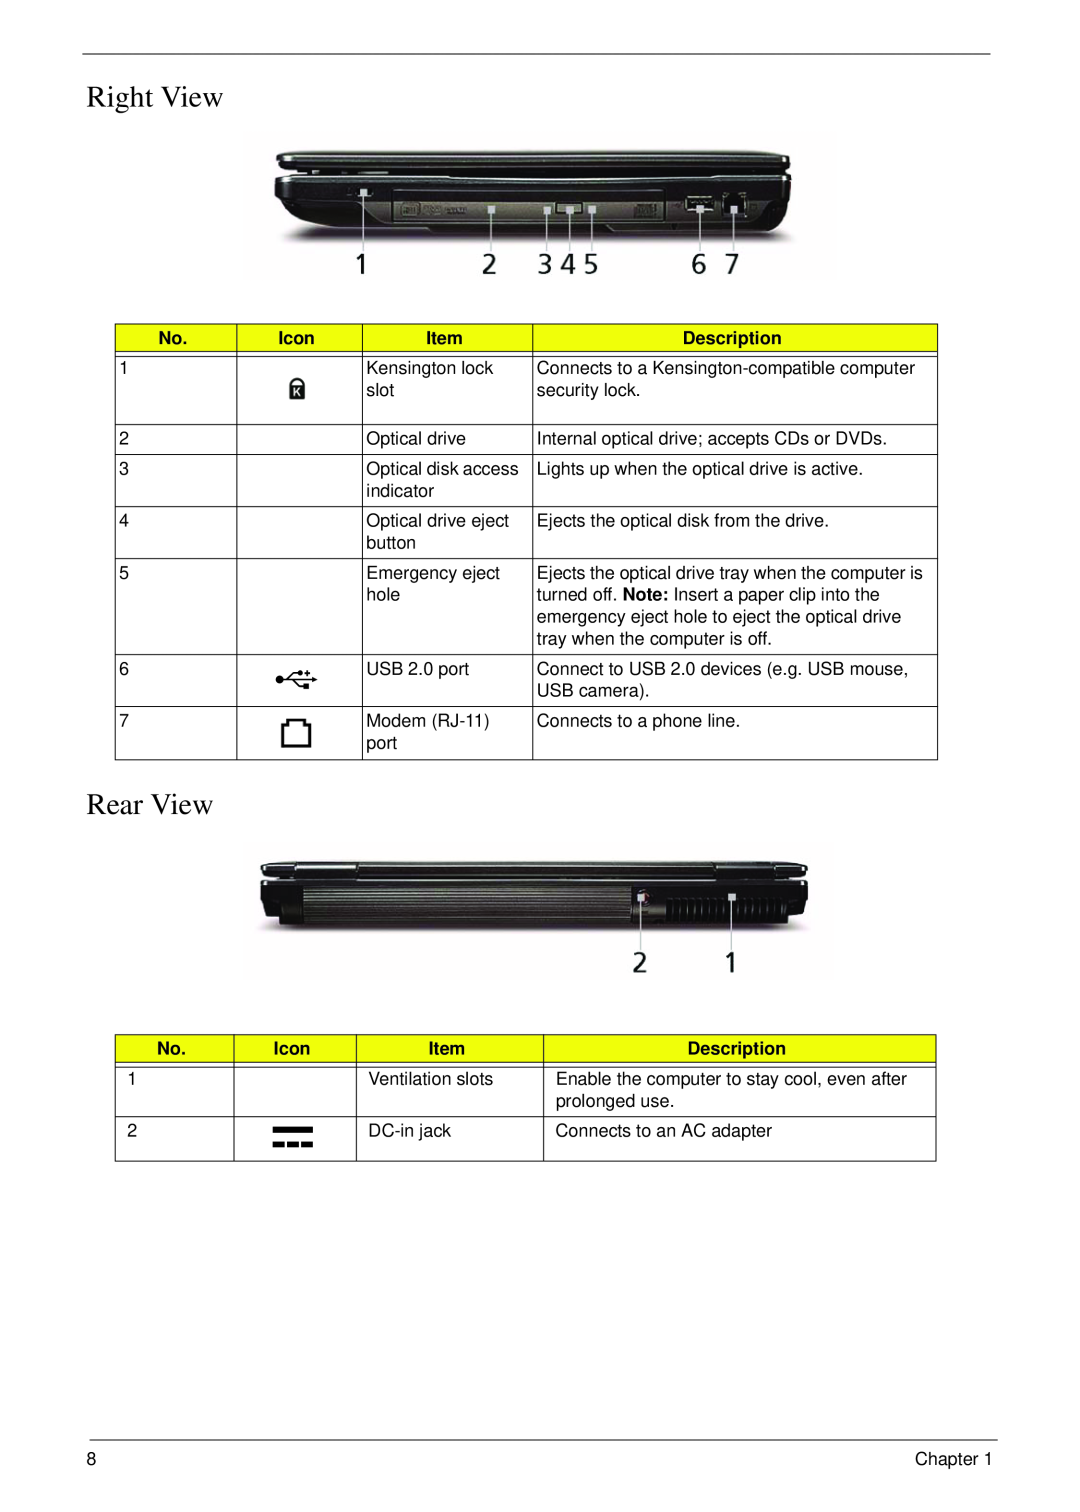 Acer 4730 manual Right View, Rear View, Icon, Description 